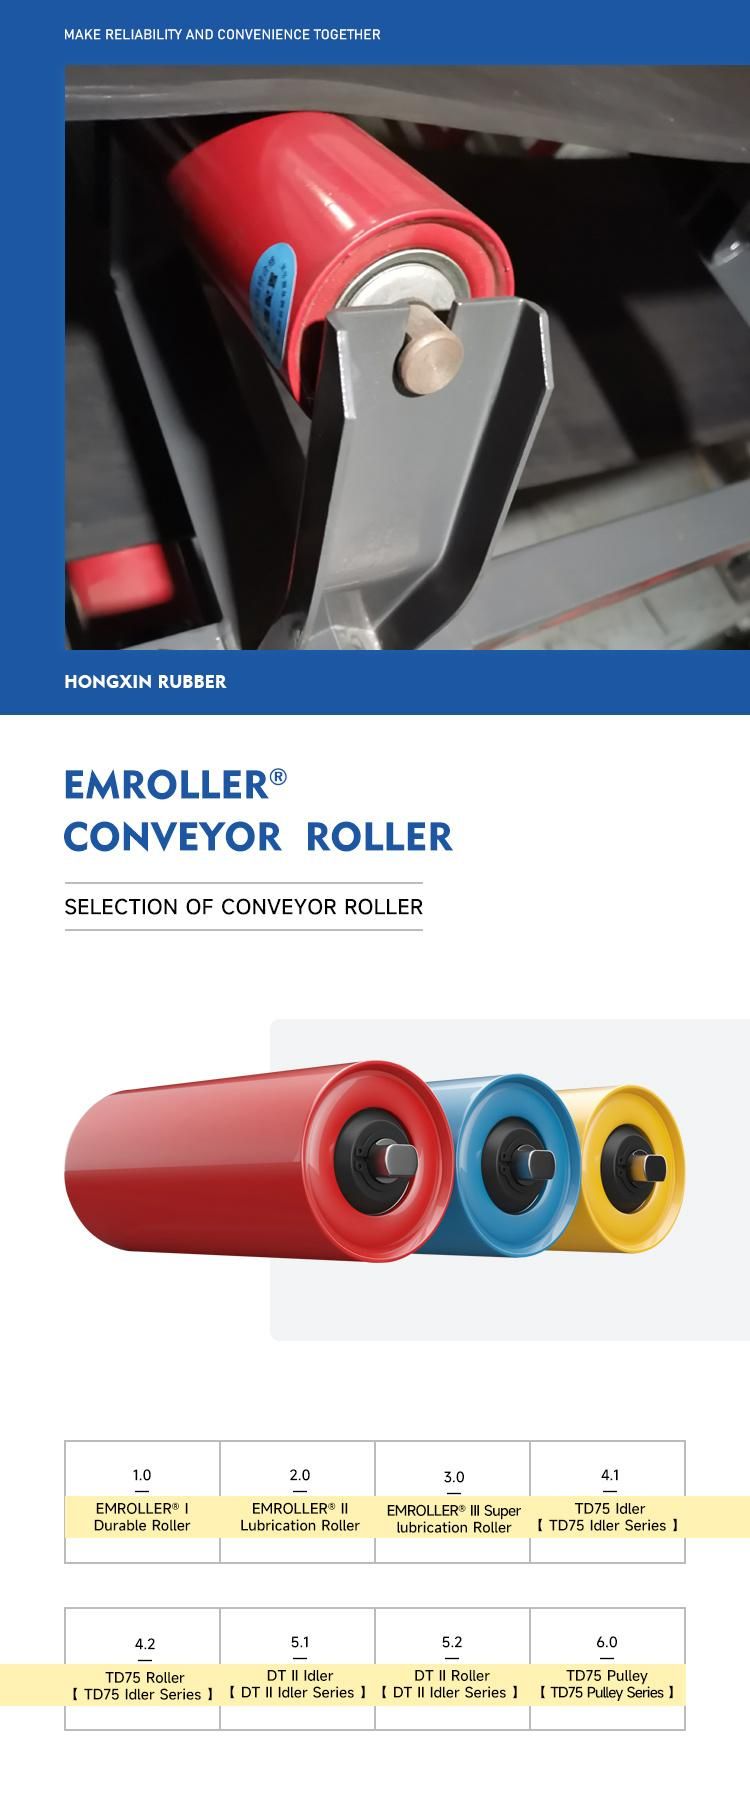 Belt Conveyor Steel Friction Aligning Idler Roller for Bulk Material Handling